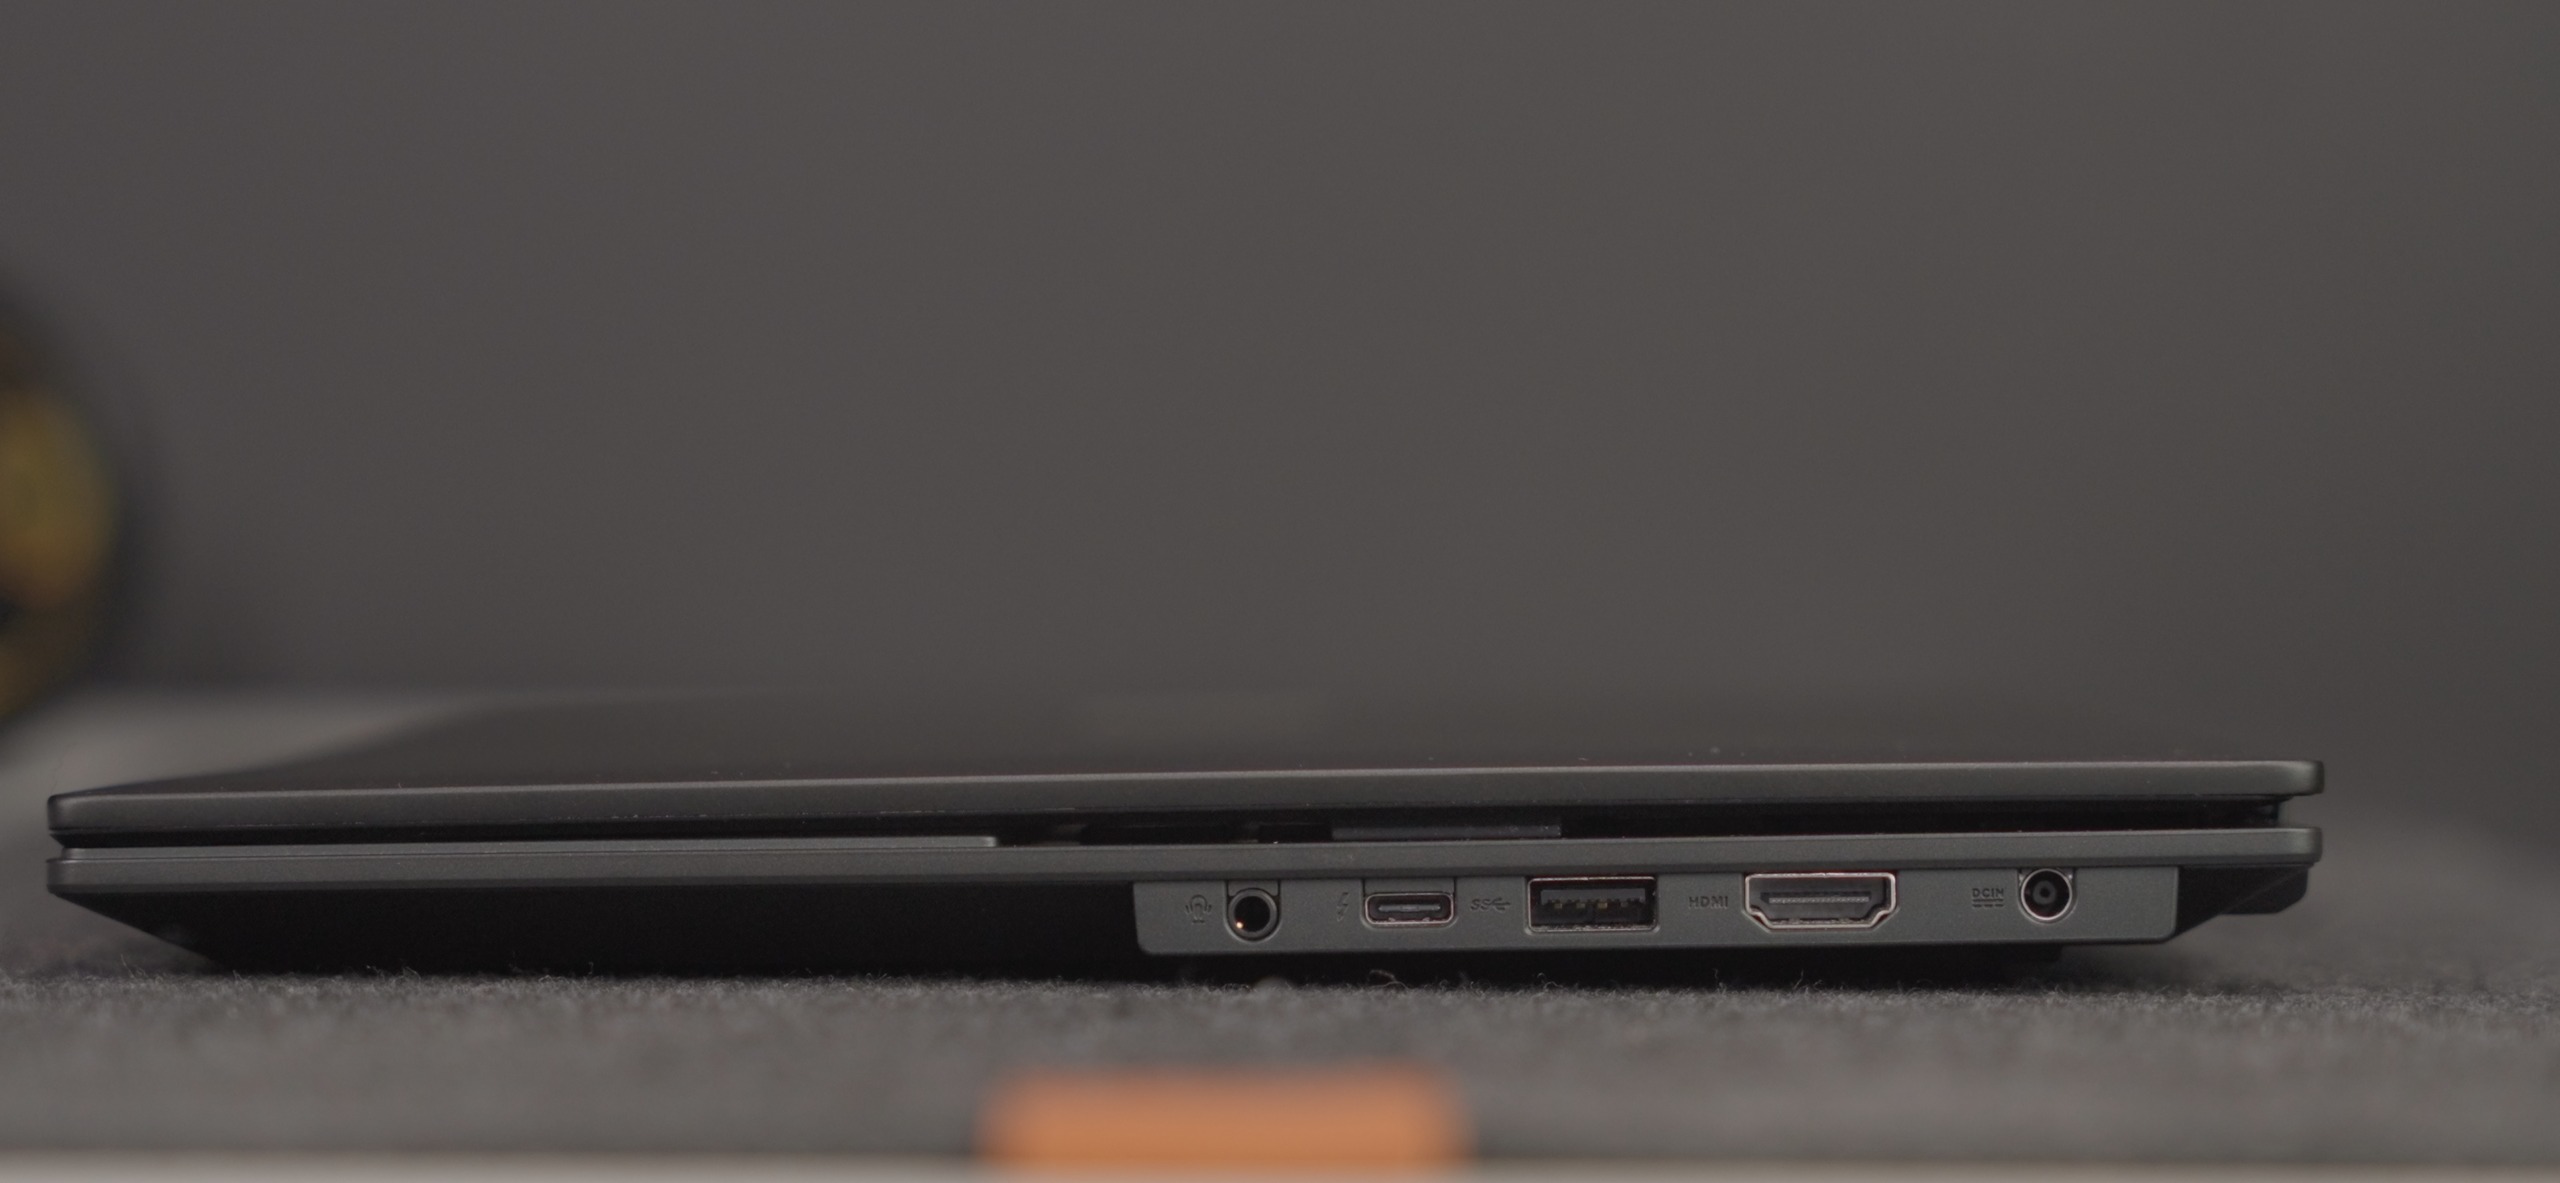 Asus Vivobook S15 OLED ports